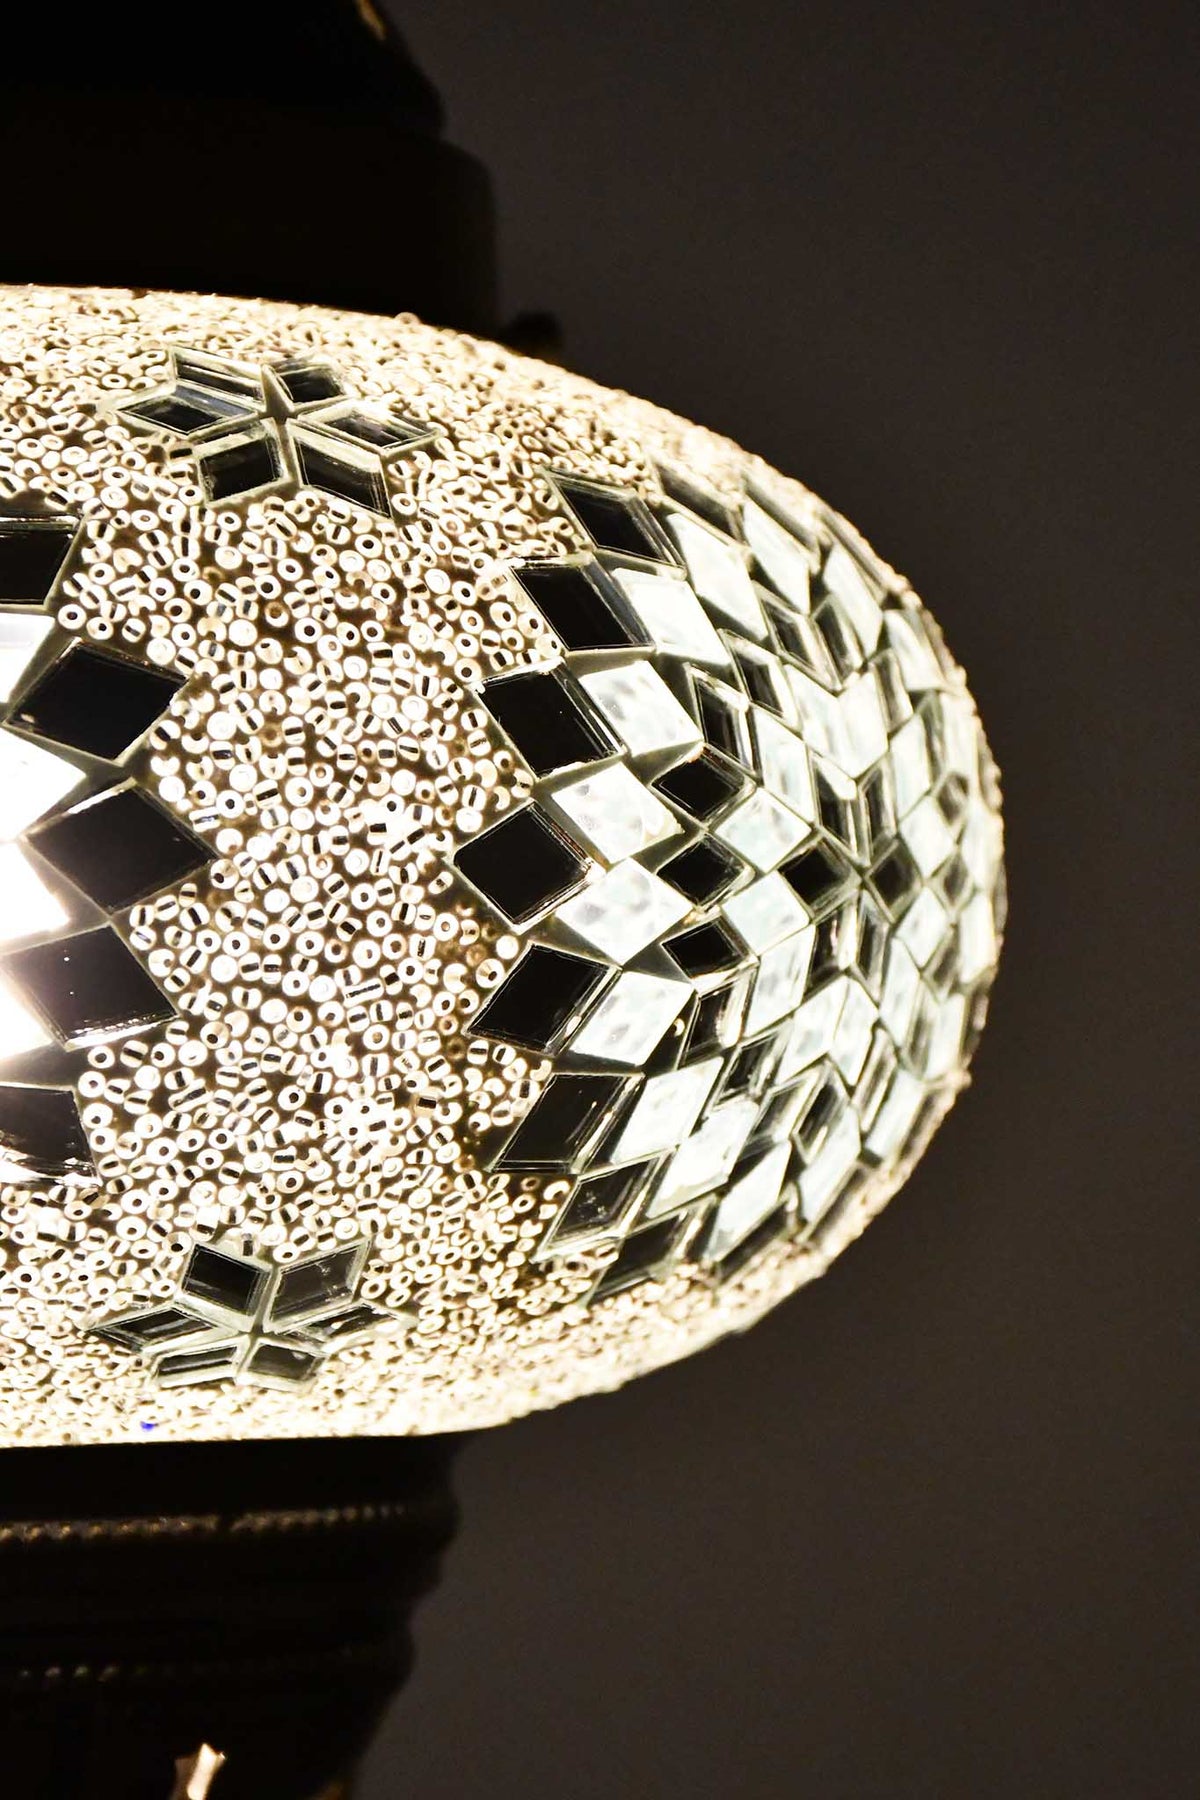 Turkish Lamp Large Clear White Star Design 2 Lighting Sydney Grand Bazaar 